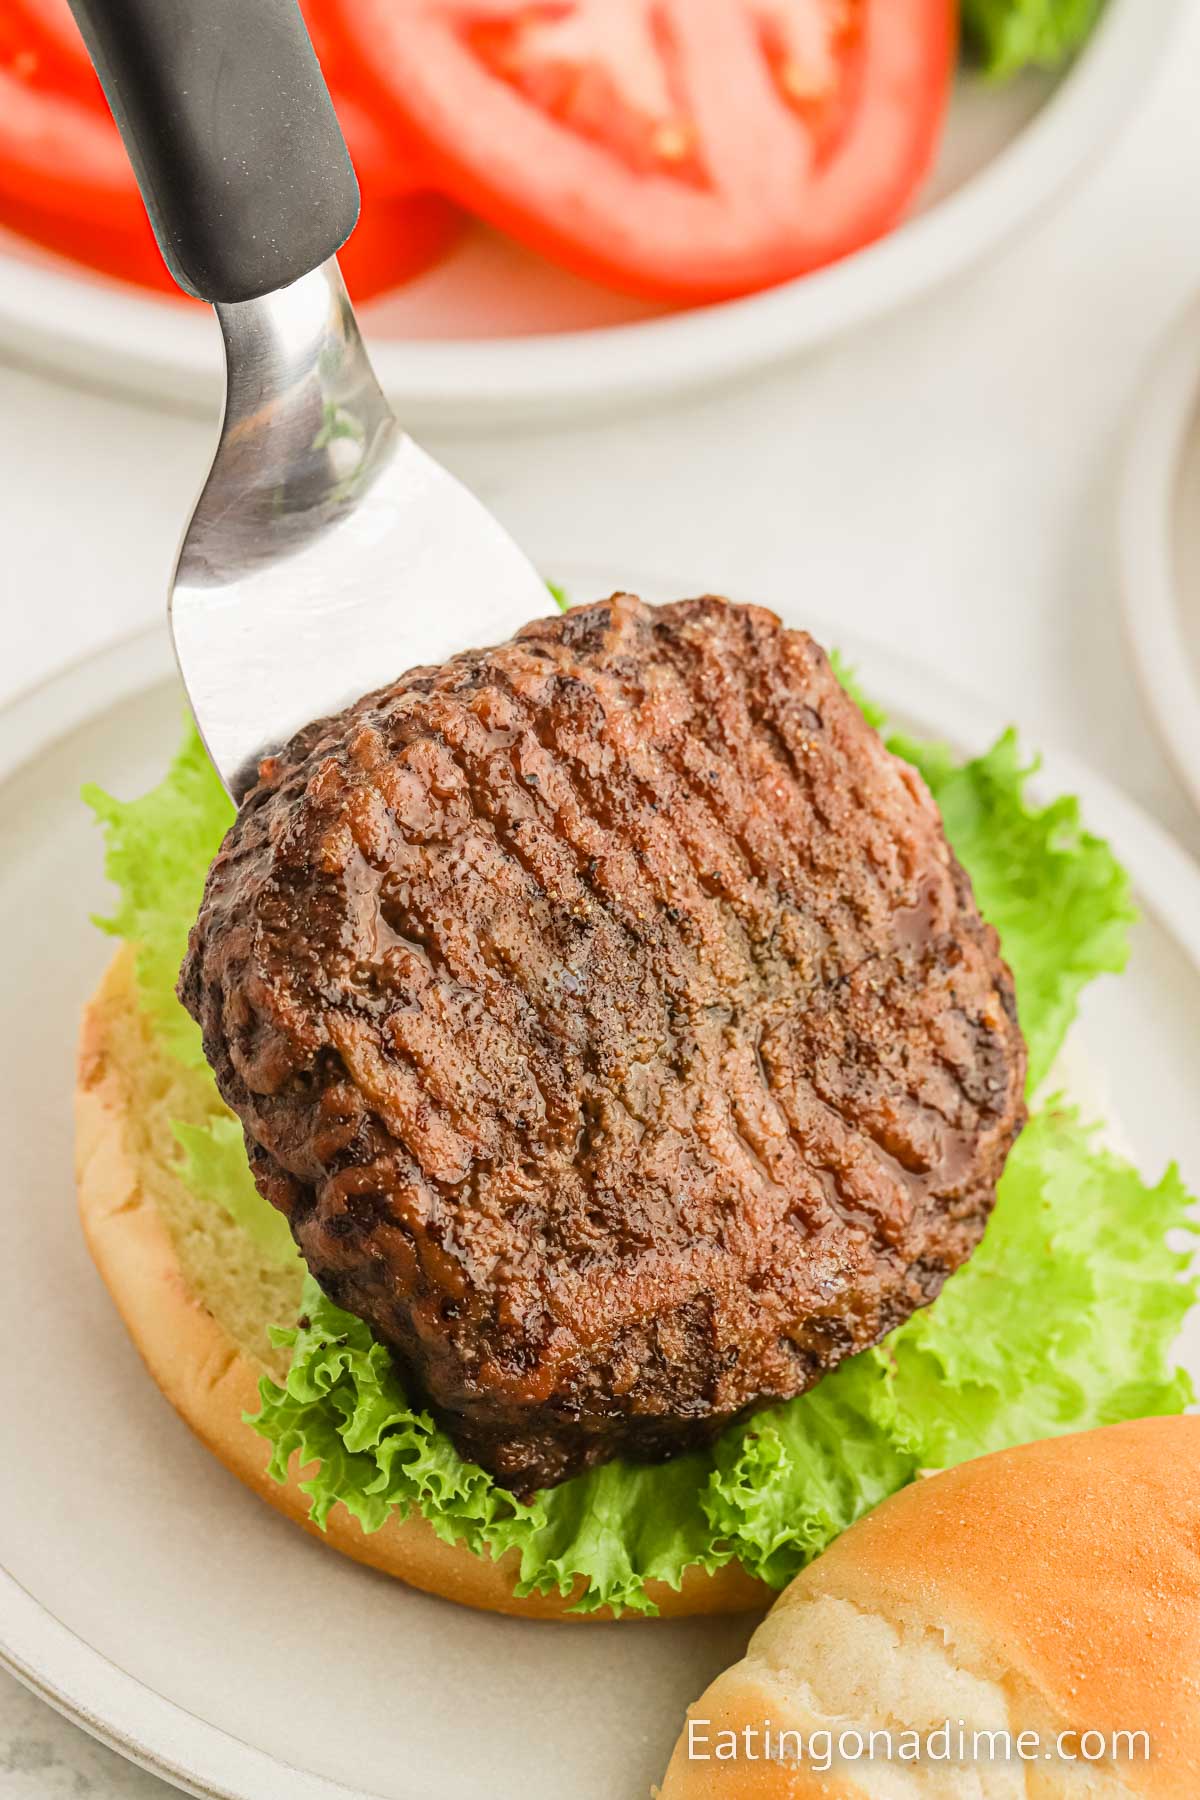 Baked Burger on hamburger bun and lettuce